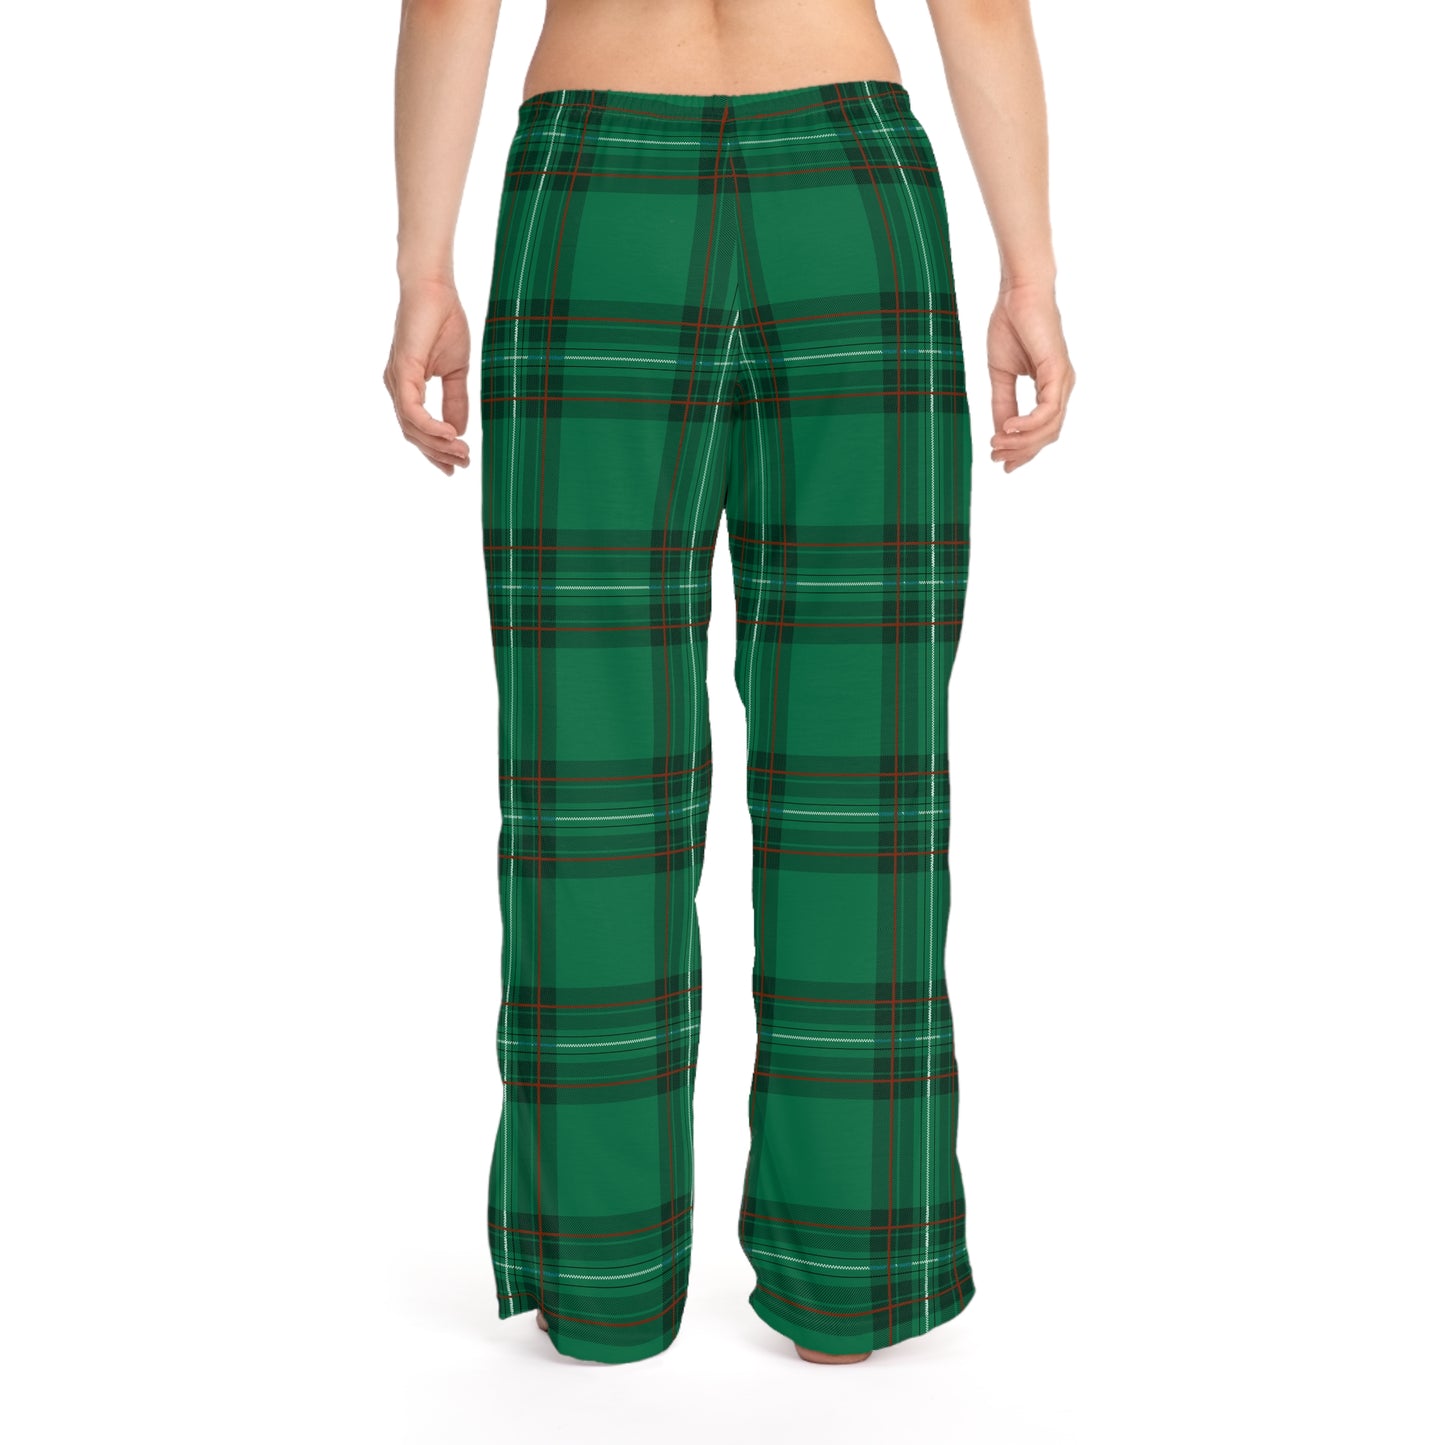 Green and Black Plaid Women's Pajama Pants (AOP)